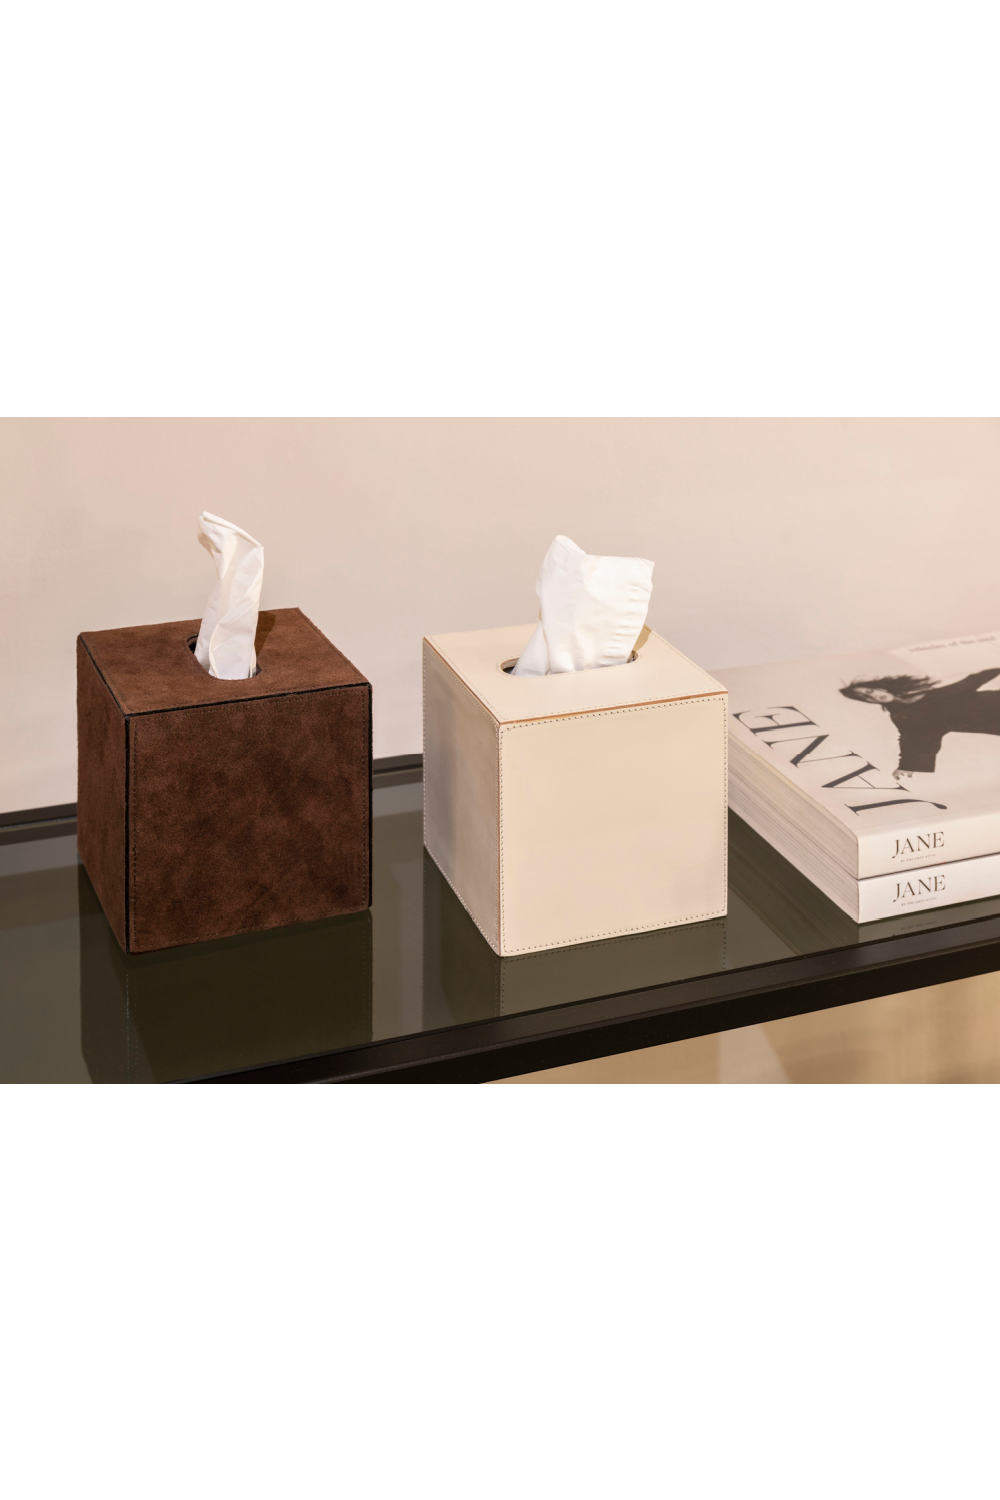 Suede Leather Tissue Box | Dome Deco Ana | Oroa.com